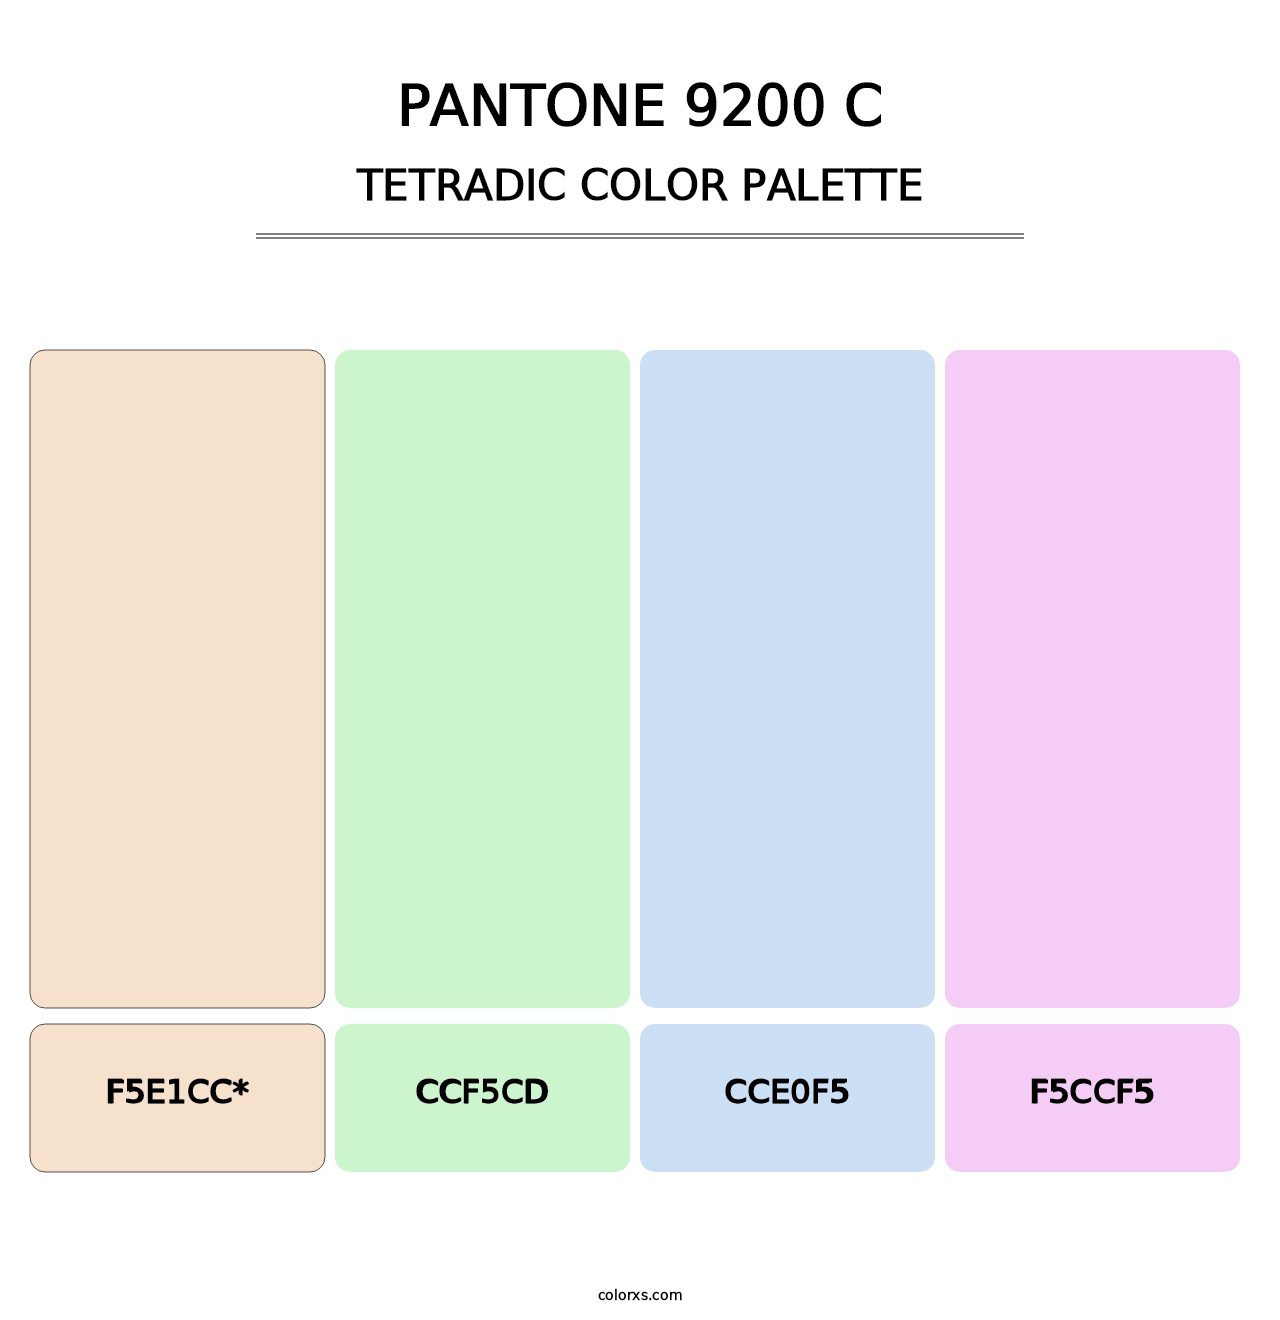 PANTONE 9200 C - Tetradic Color Palette